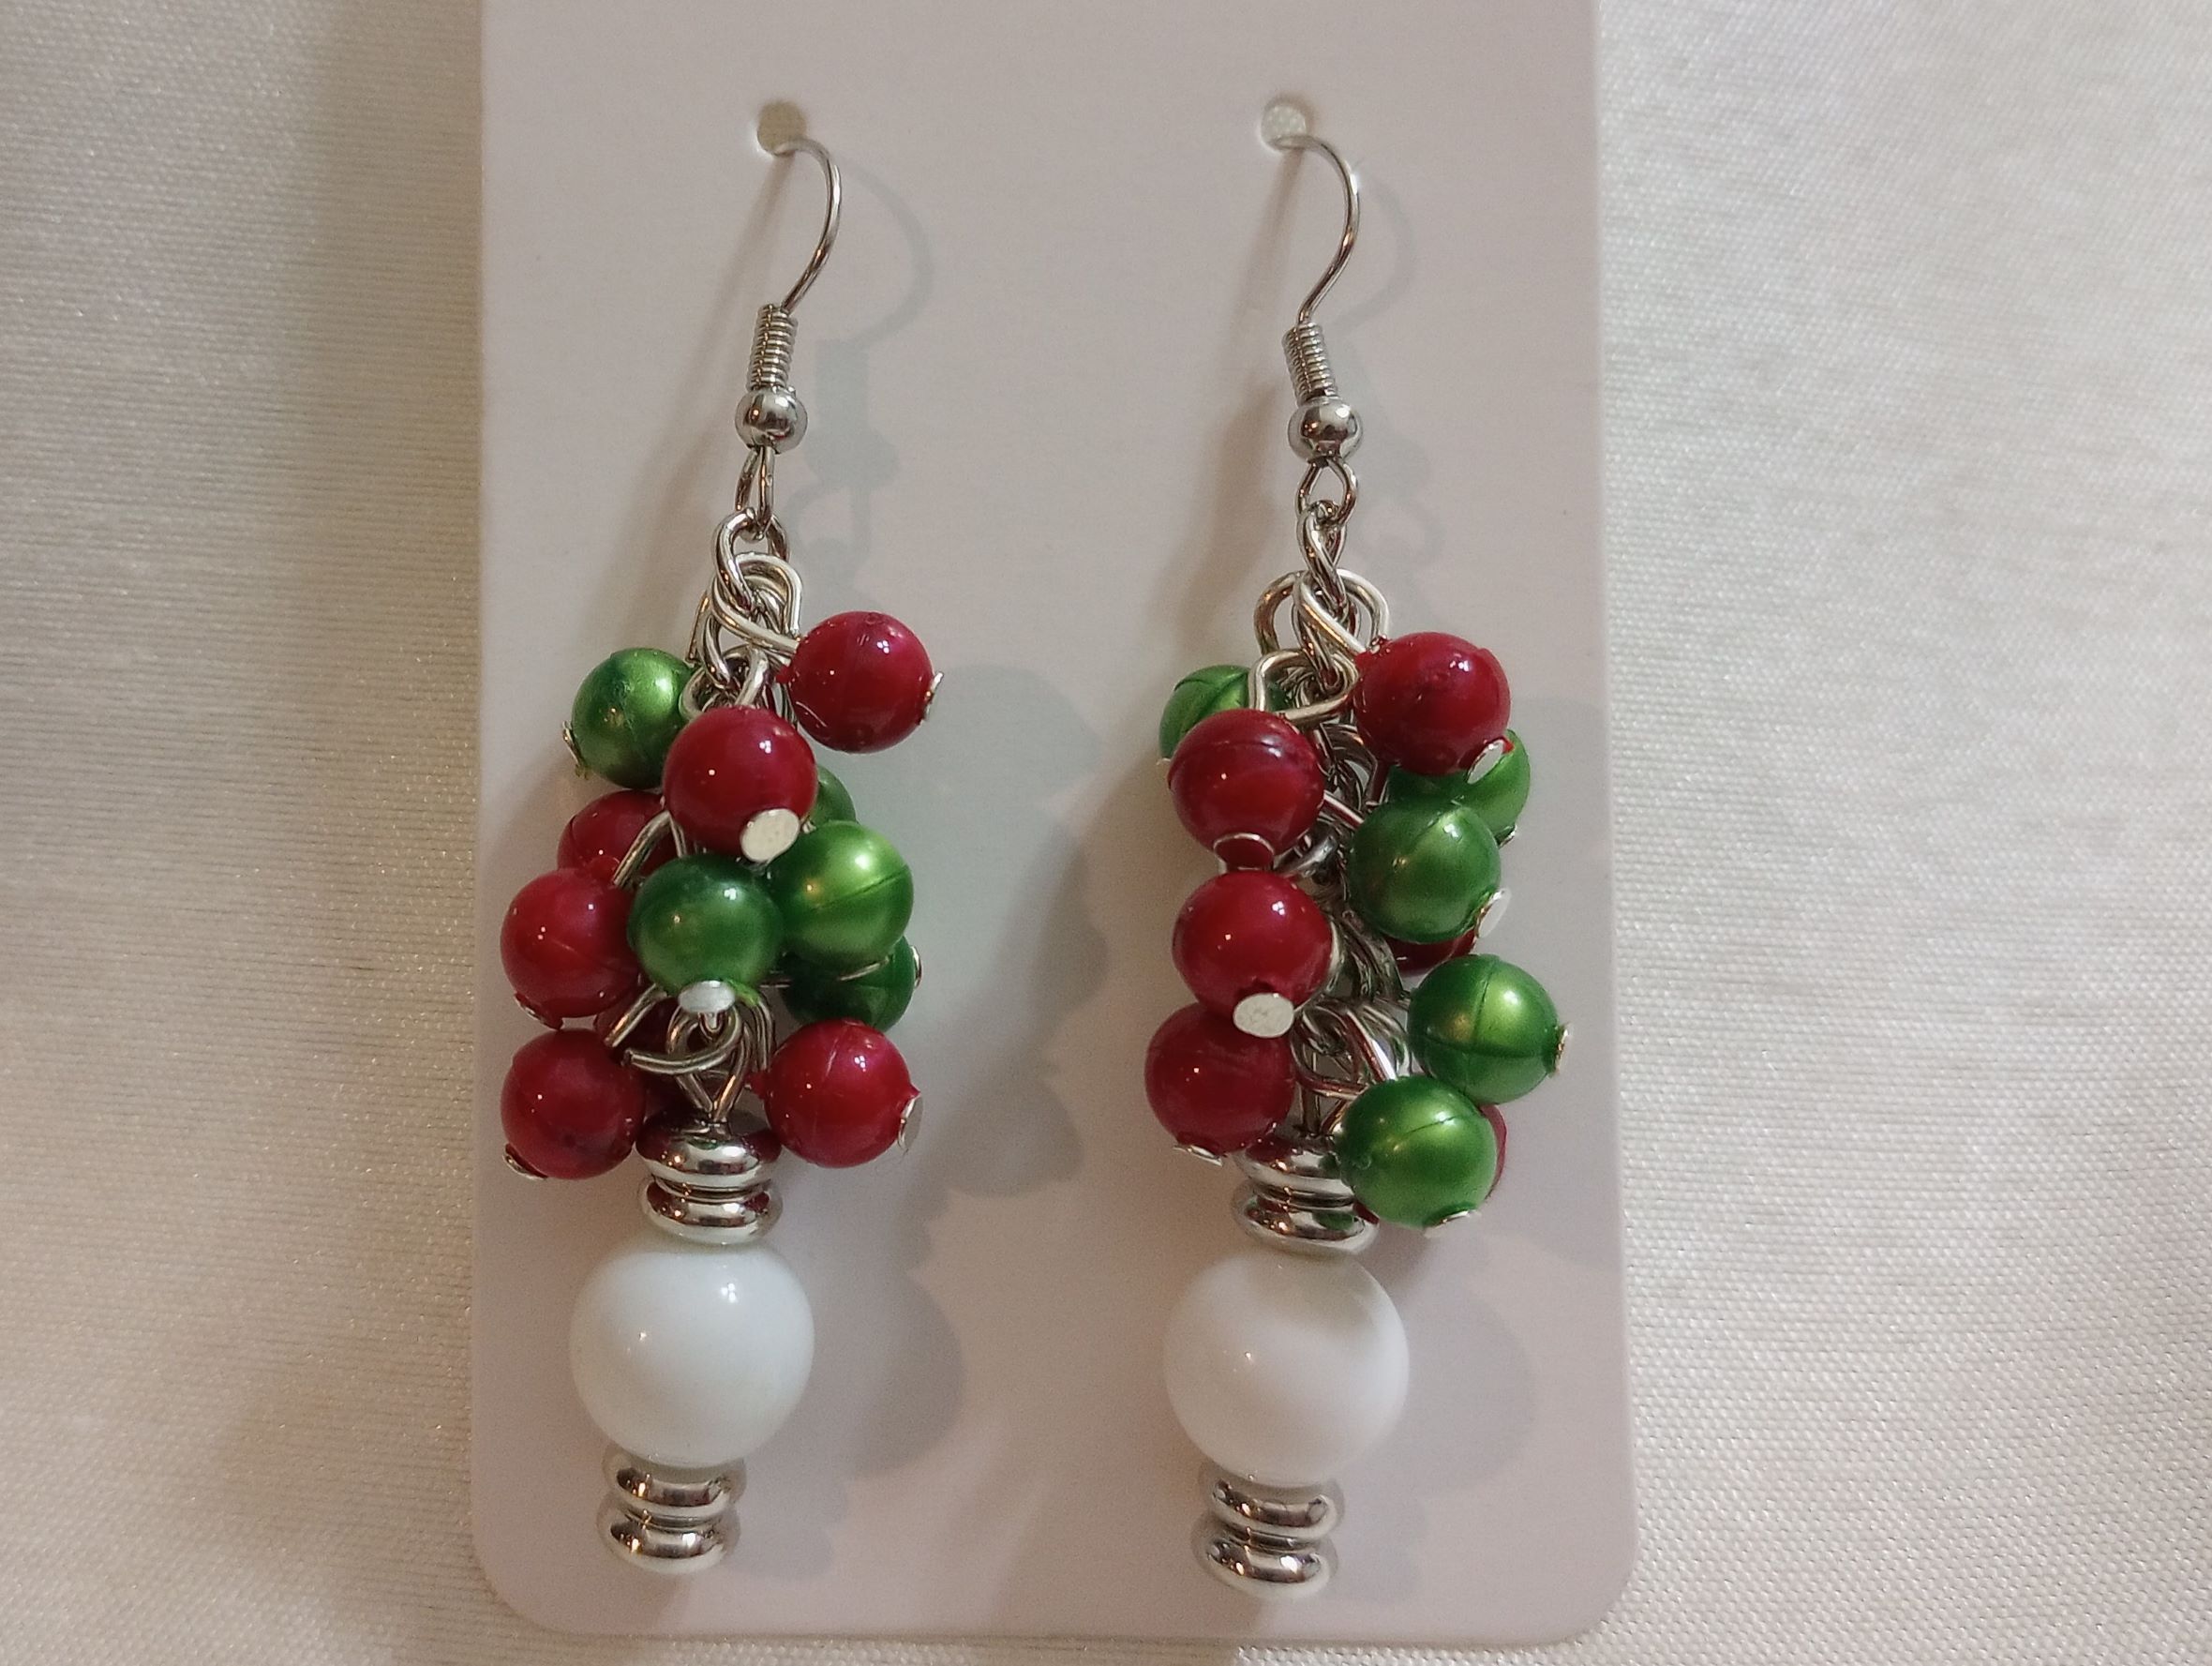 A – Christmas Tree Earrings